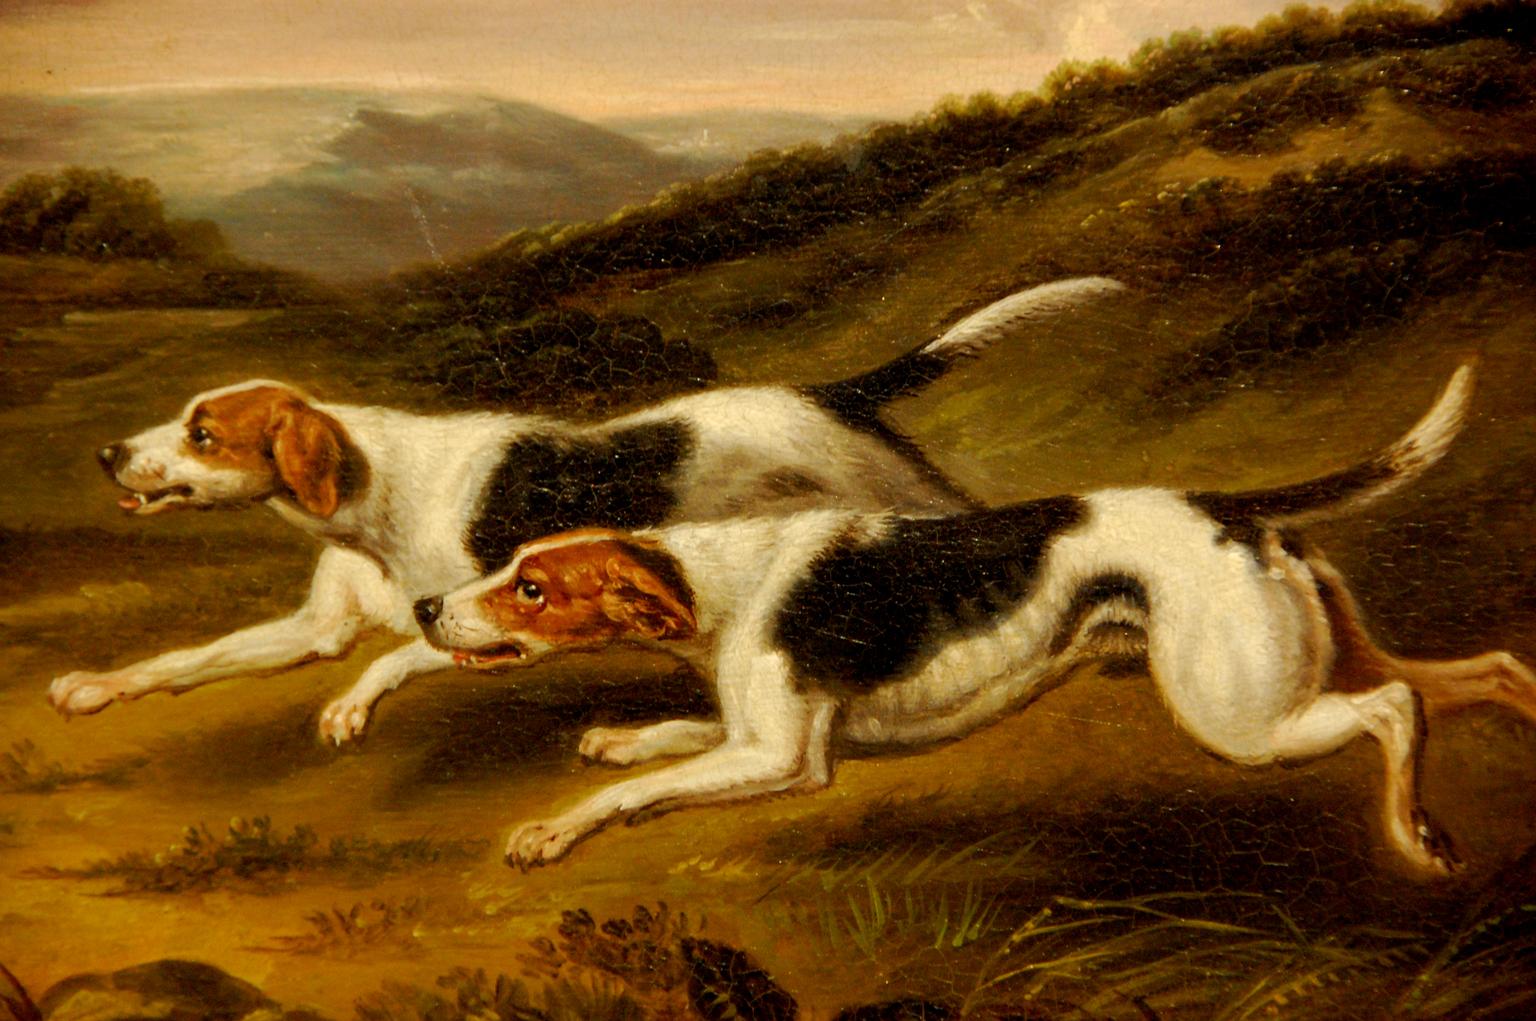 English Original Samuel Raven Pair of Hound Dog Oil Paintings in Original Frames For Sale 2